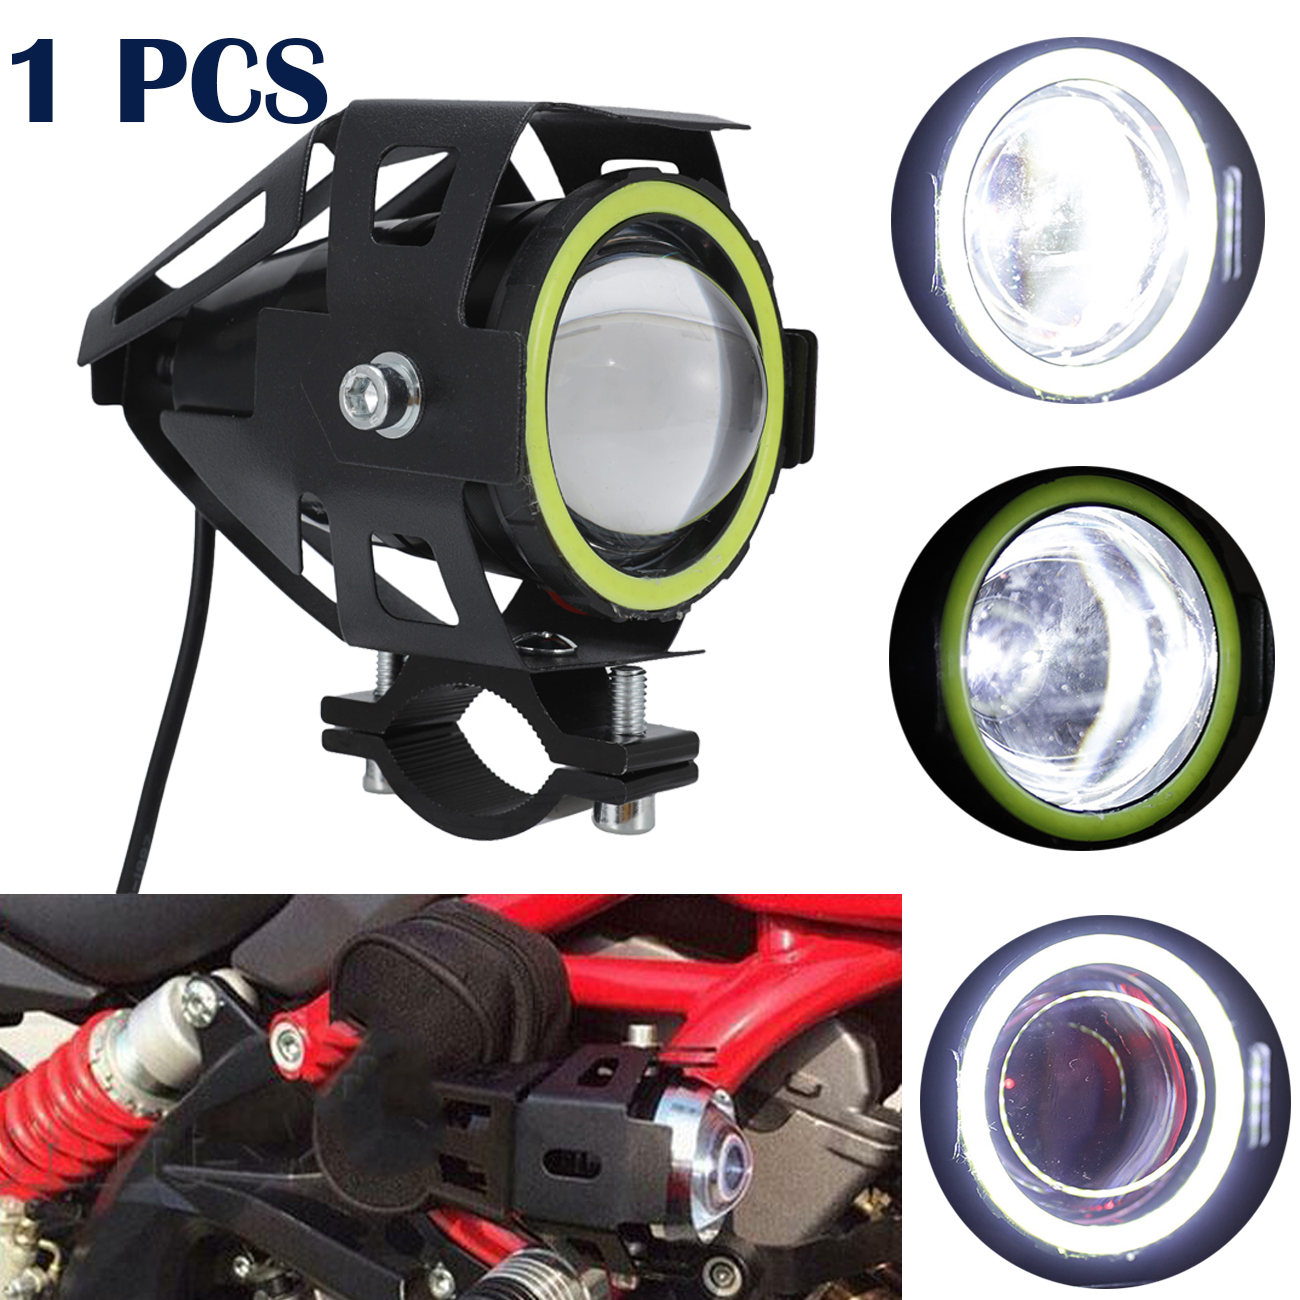 1pcs 125W U7 Angel Eyes Light Motorcycle Headlight LED Fog Spotlight+Switch